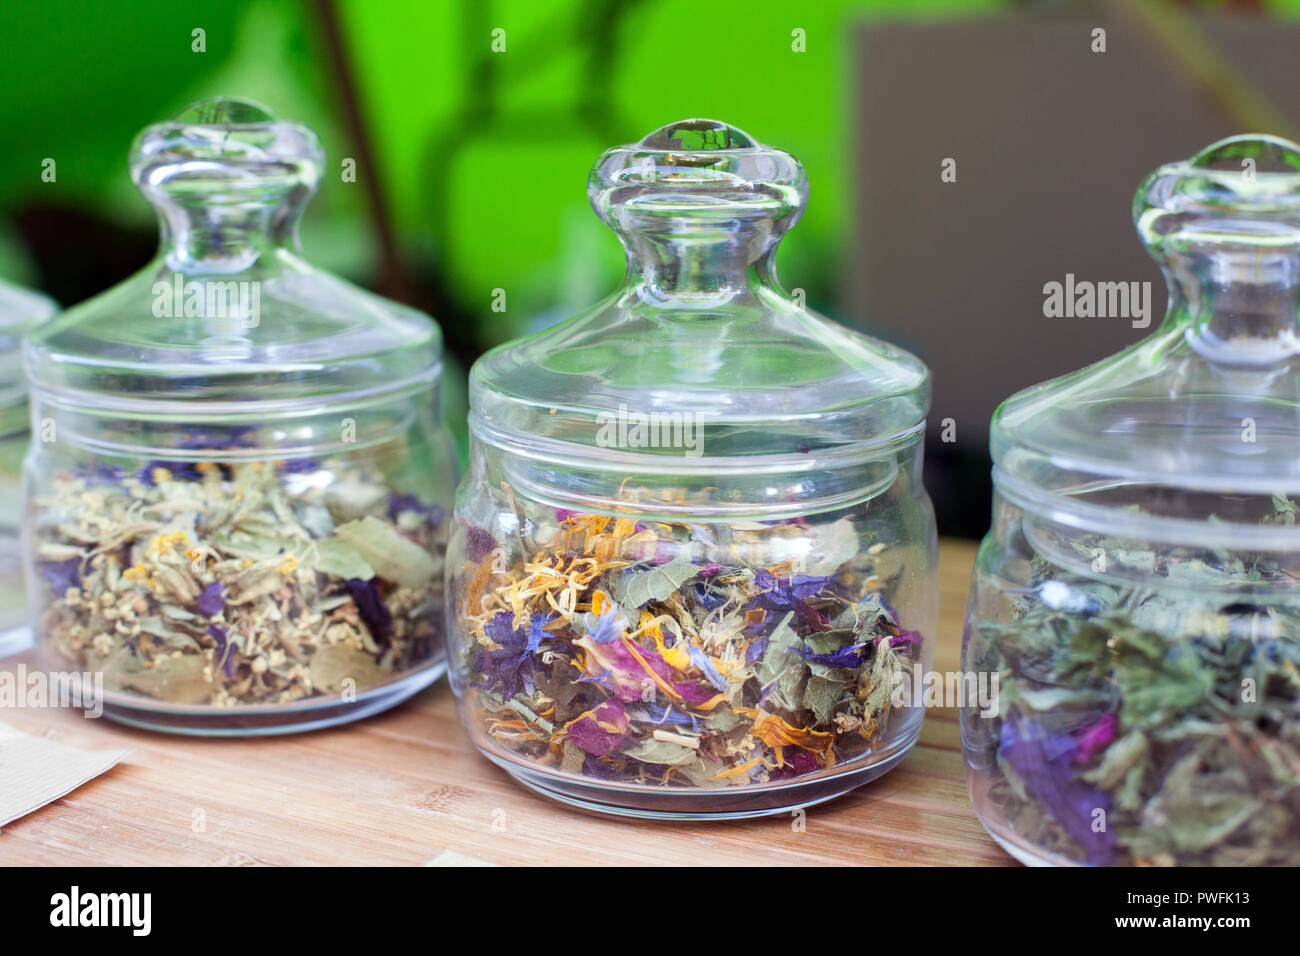 https://c8.alamy.com/comp/PWFK13/different-flavor-flower-tea-in-glass-jars-dried-flowers-organic-herbal-tea-organic-tea-PWFK13.jpg